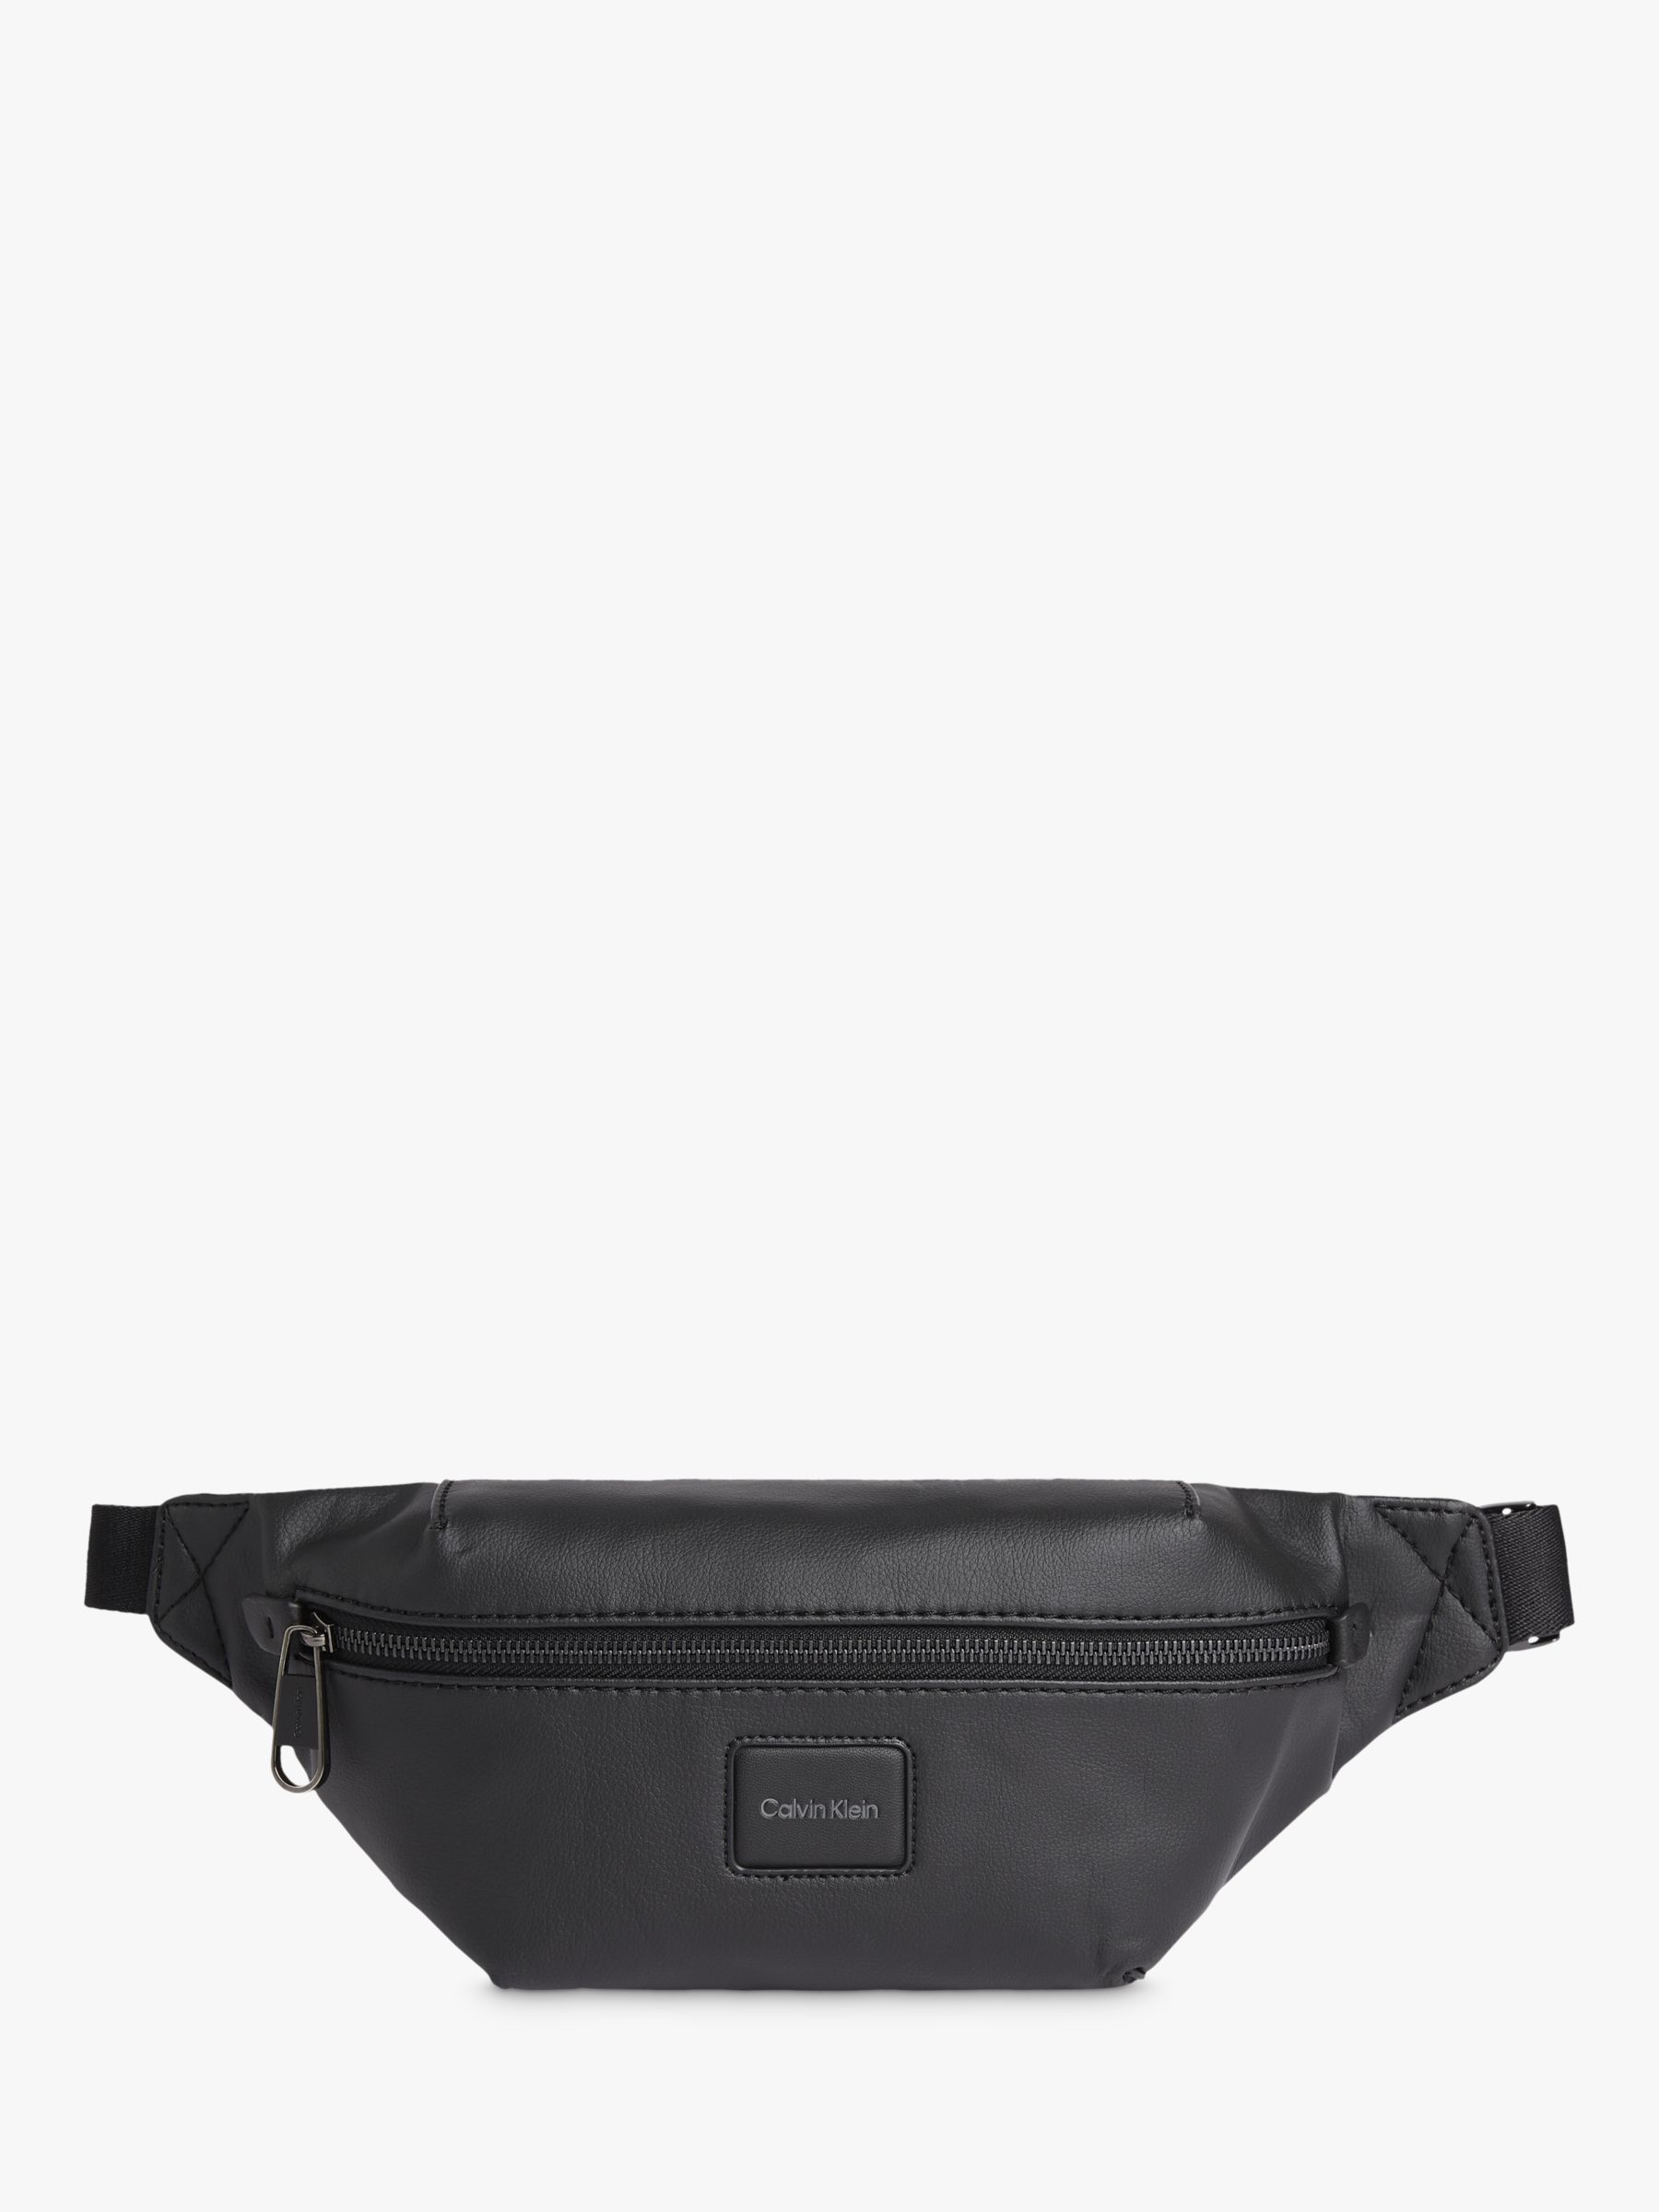 Calvin Klein Faux Leather Bum Bag, One Size, Black